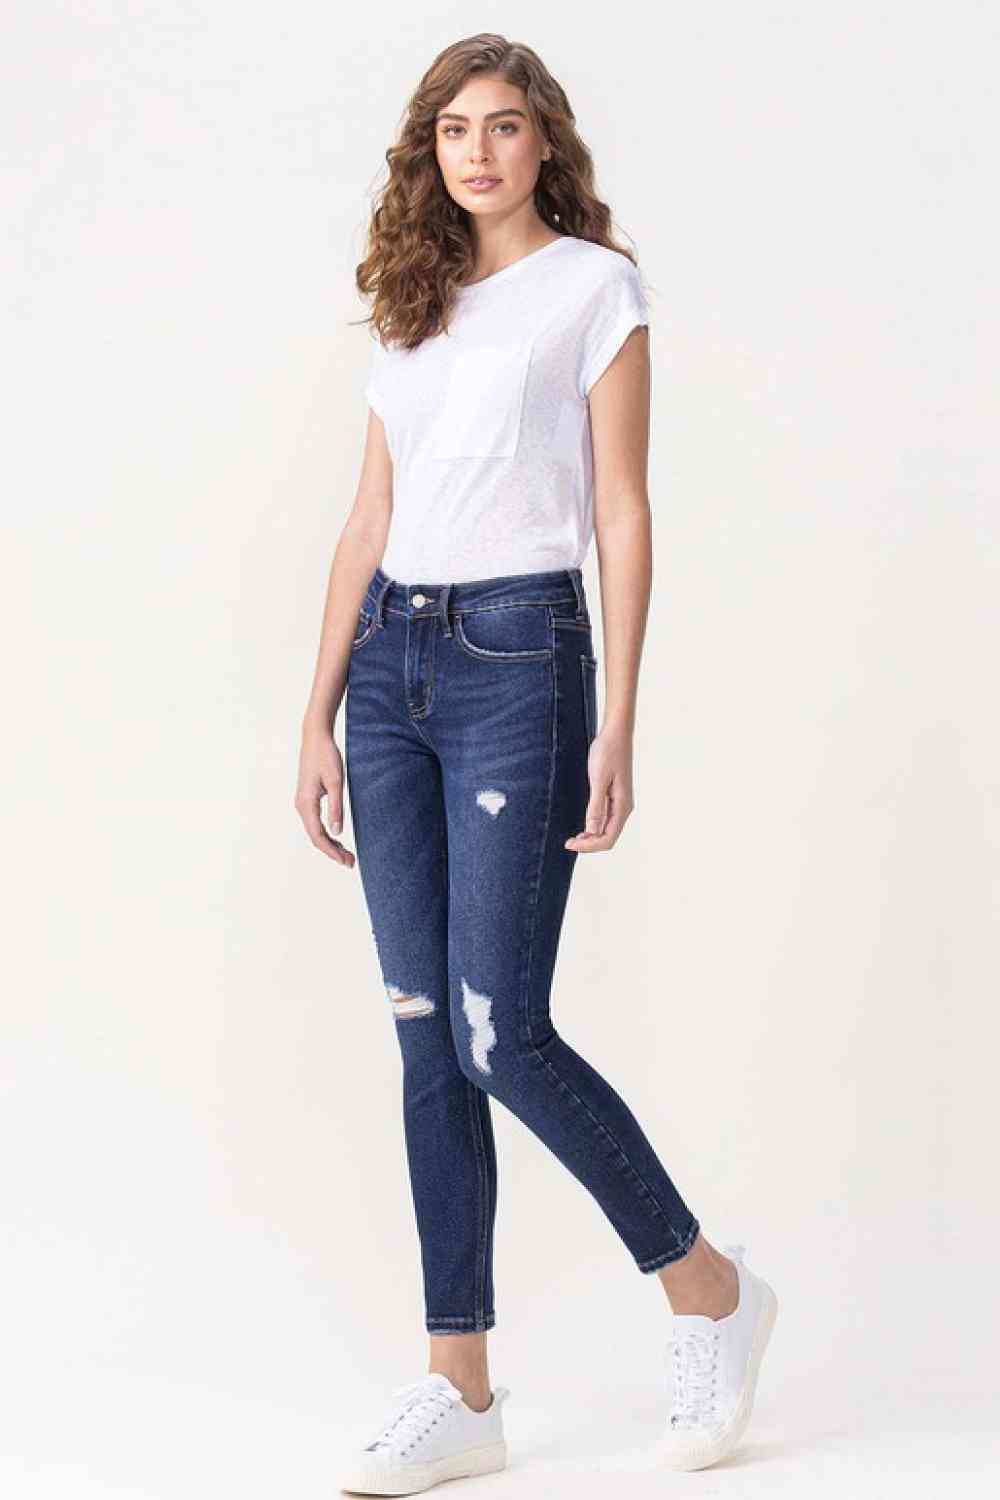 Chelsea Lovervet Midrise Crop Skinny Jeans